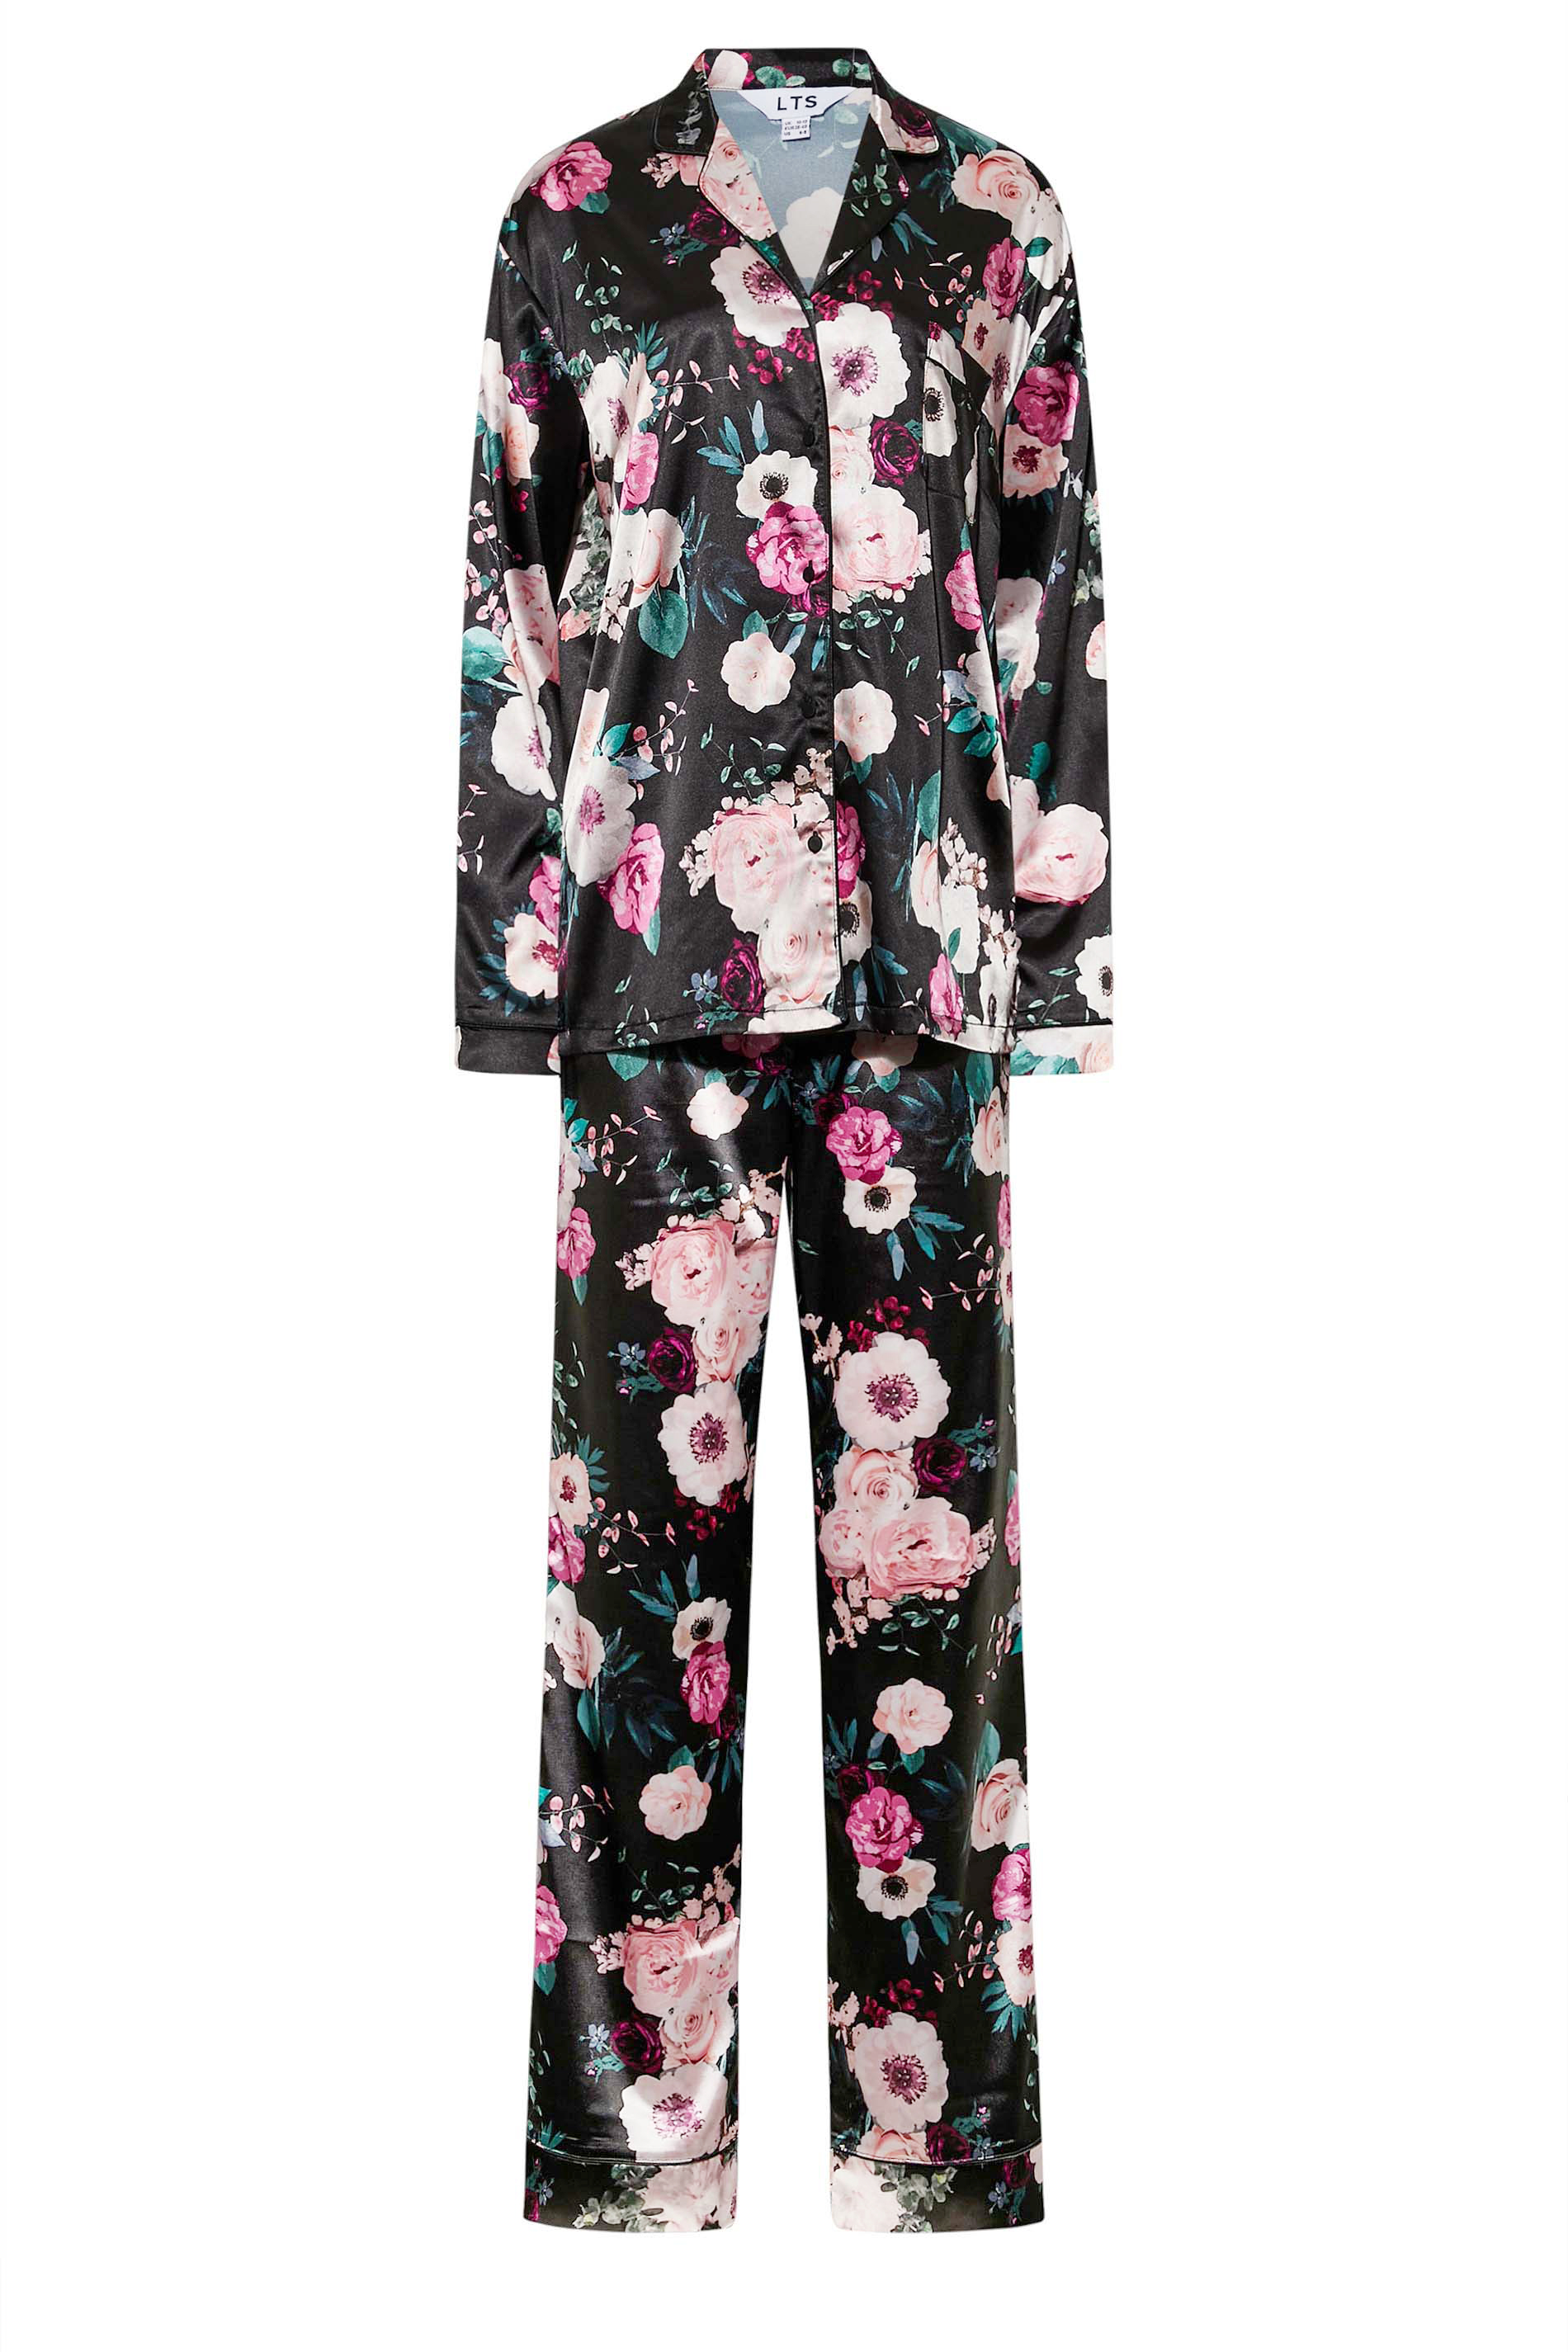 LTS Tall Women's Black Floral Satin Pyjama Set | Long Tall Sally  2